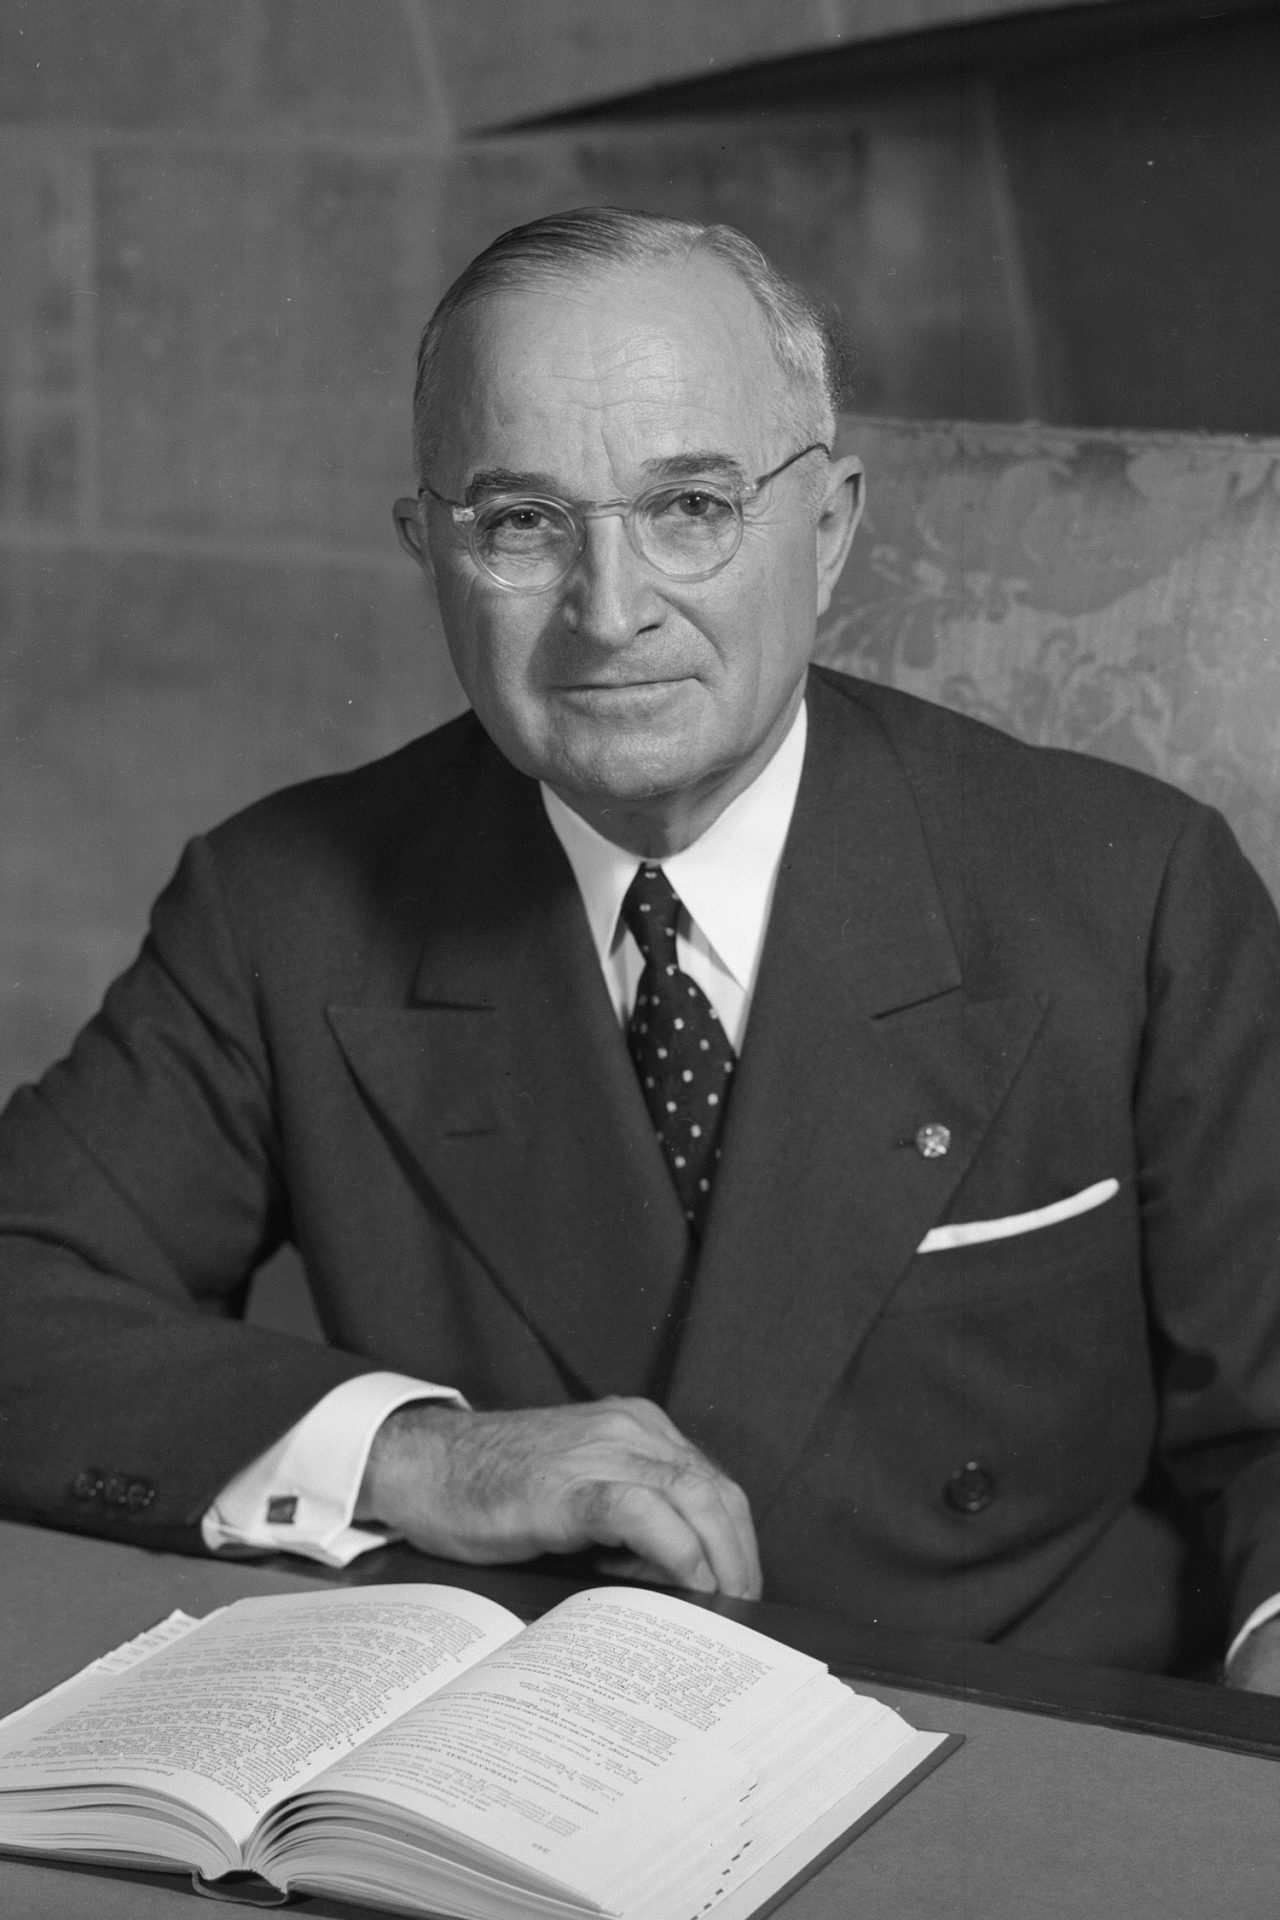 6. Harry Truman 